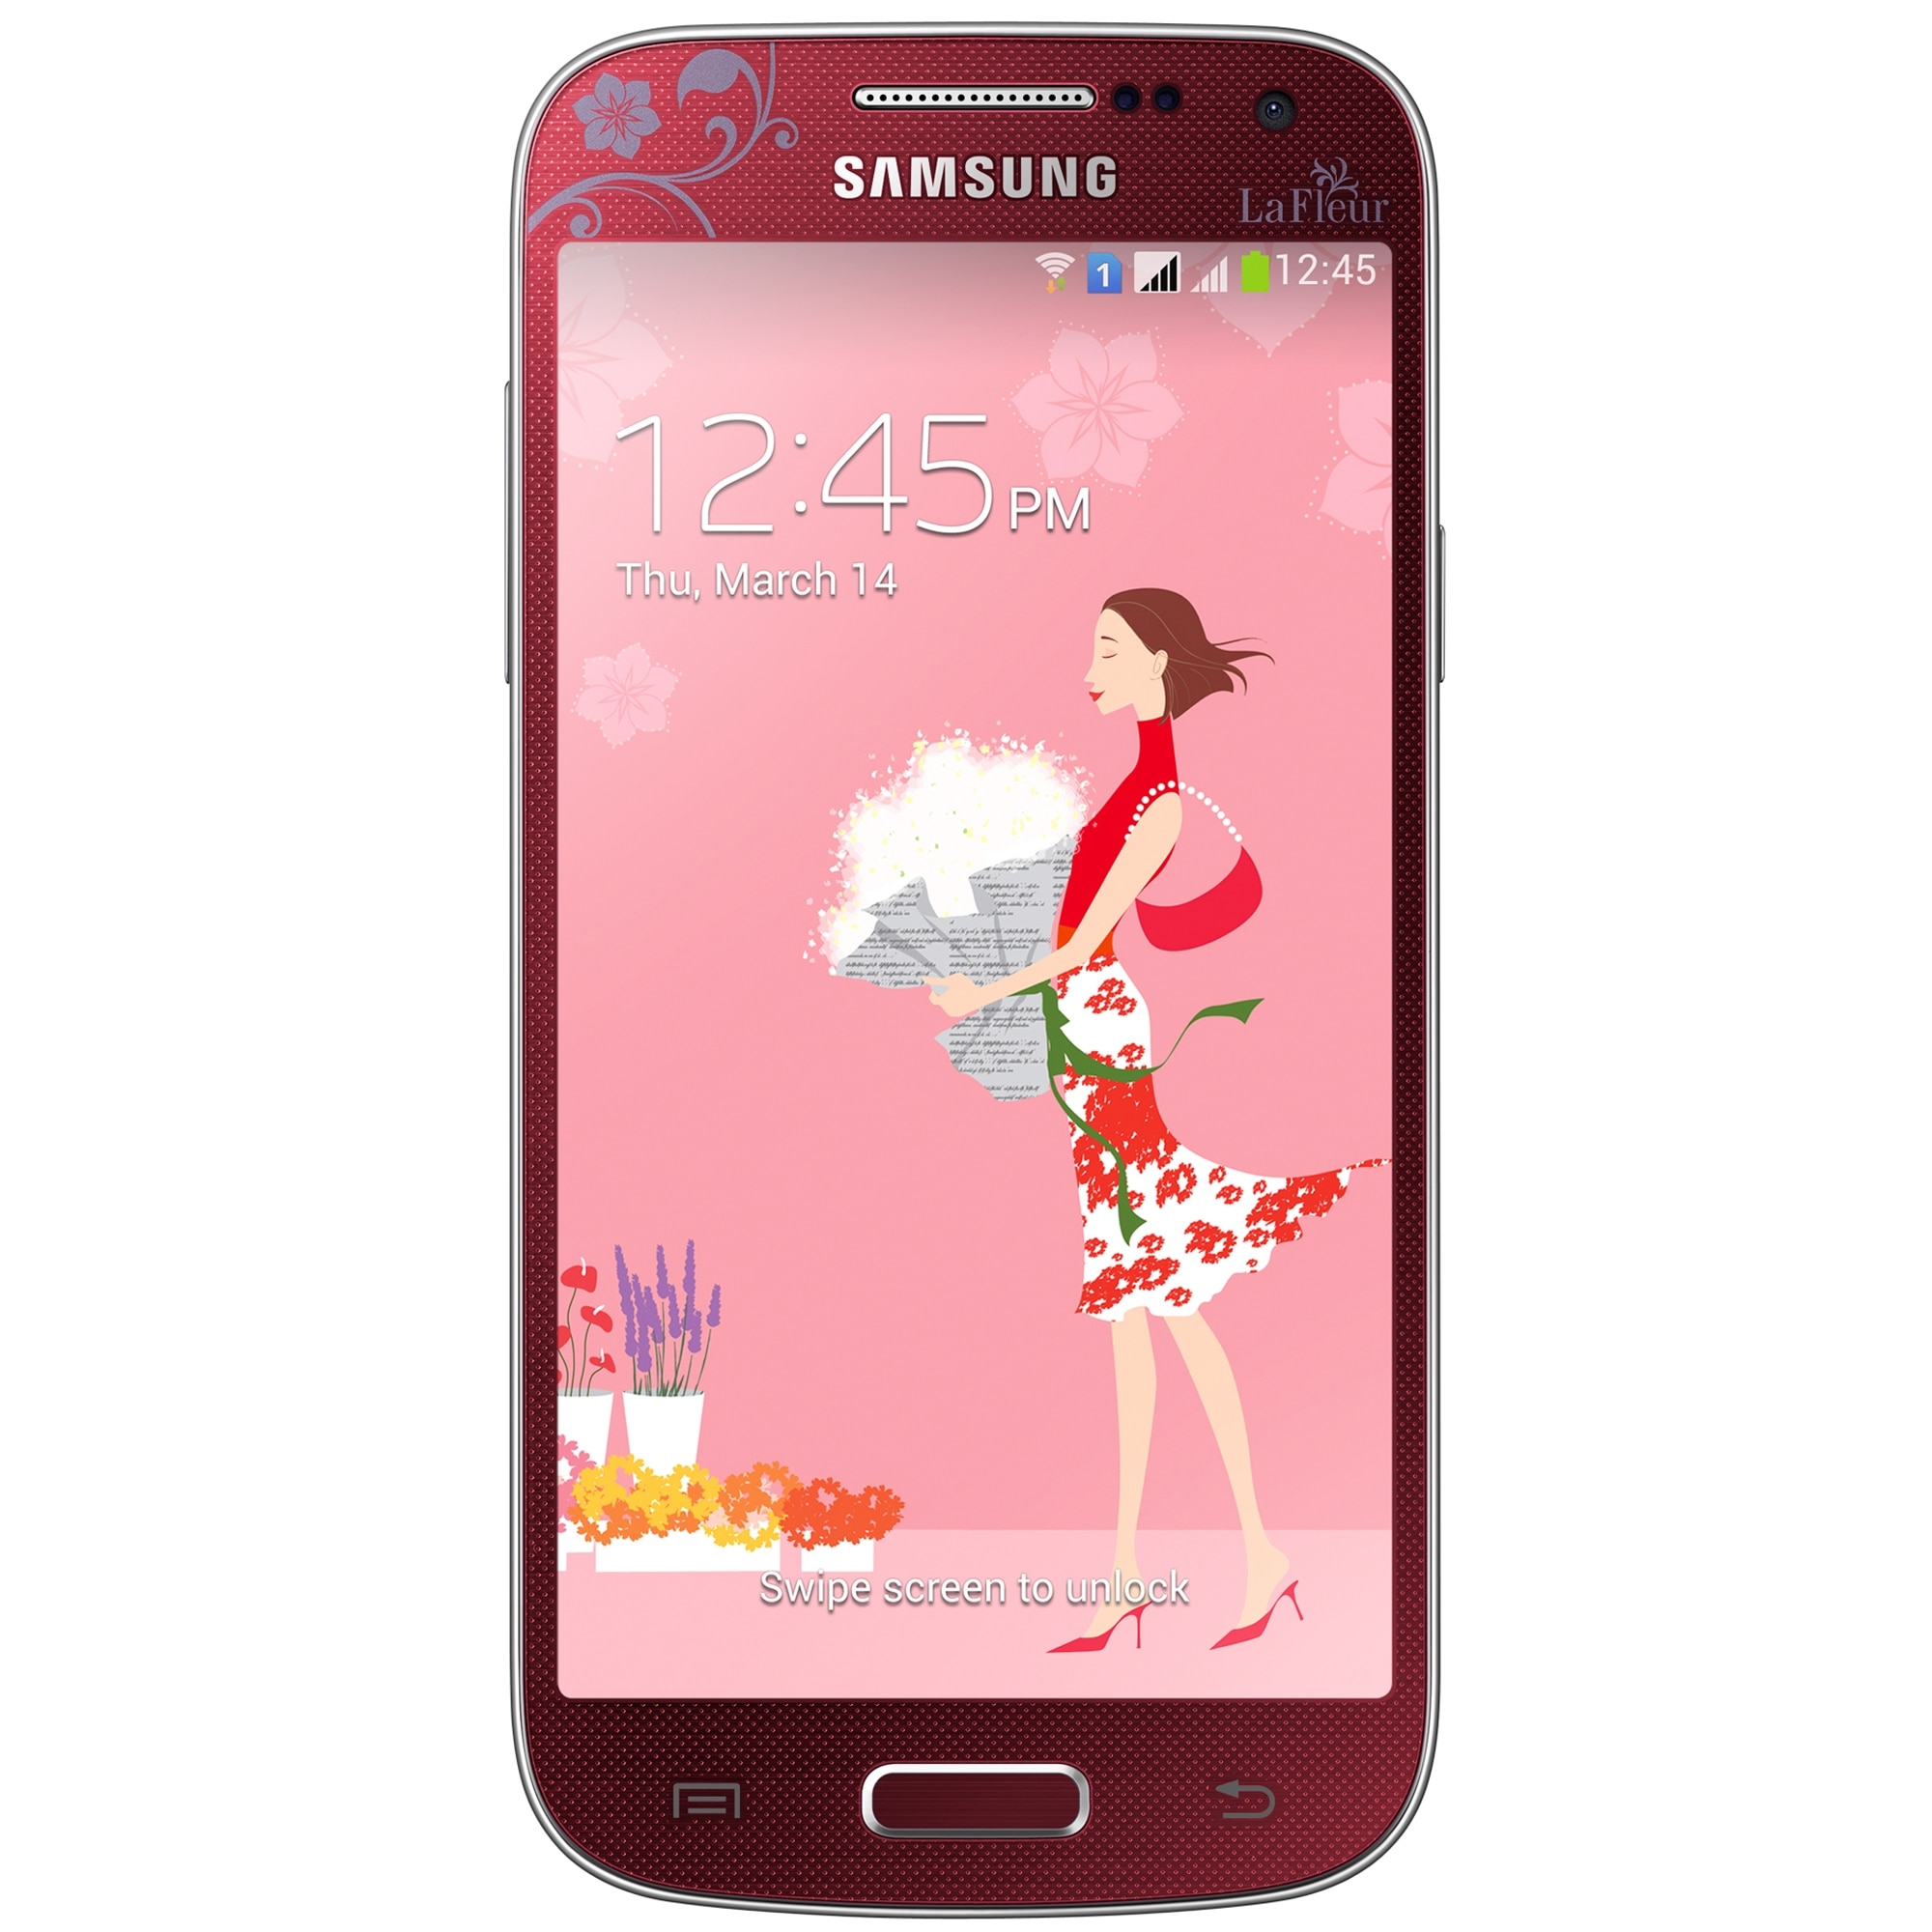 Самсунг la fleur. Samsung Galaxy s4 la fleur. Samsung Galaxy la fleur s4 Duos. Самсунг s4 Mini ля Флер. Samsung Galaxy s4 Mini la fleur.